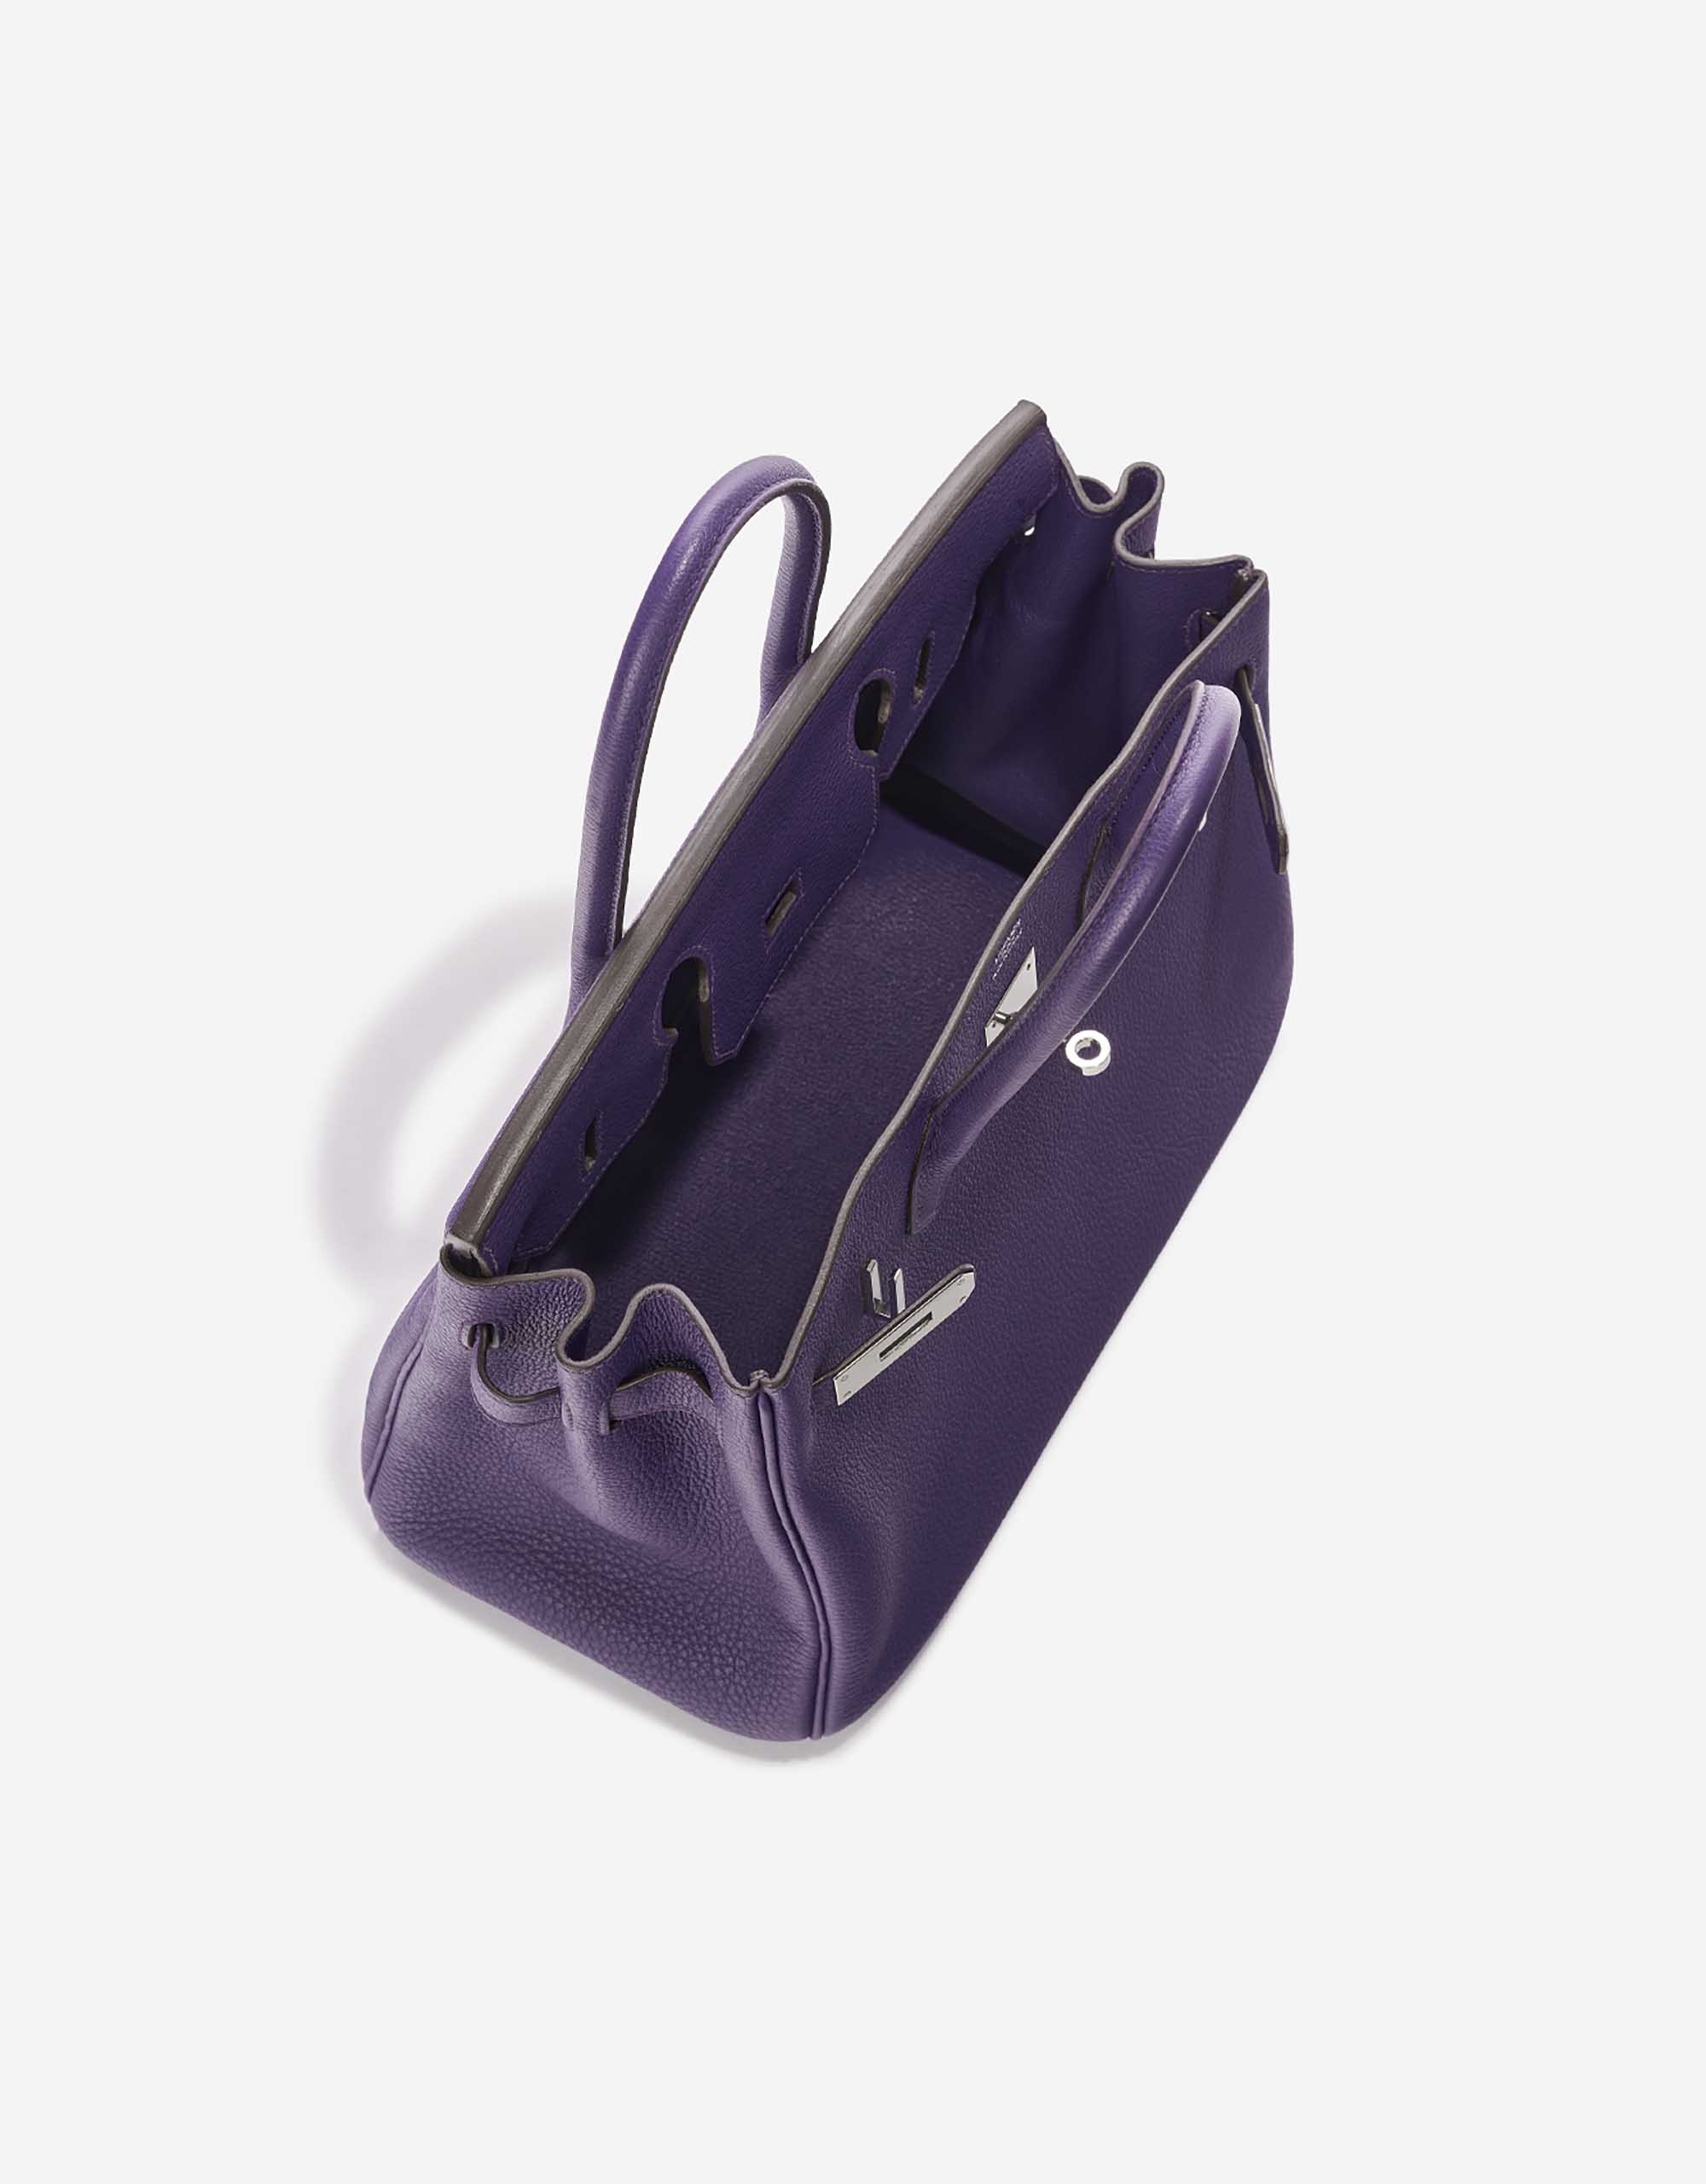 Hermes Birkin 30cm Purple Togo leather with gold hardware bag